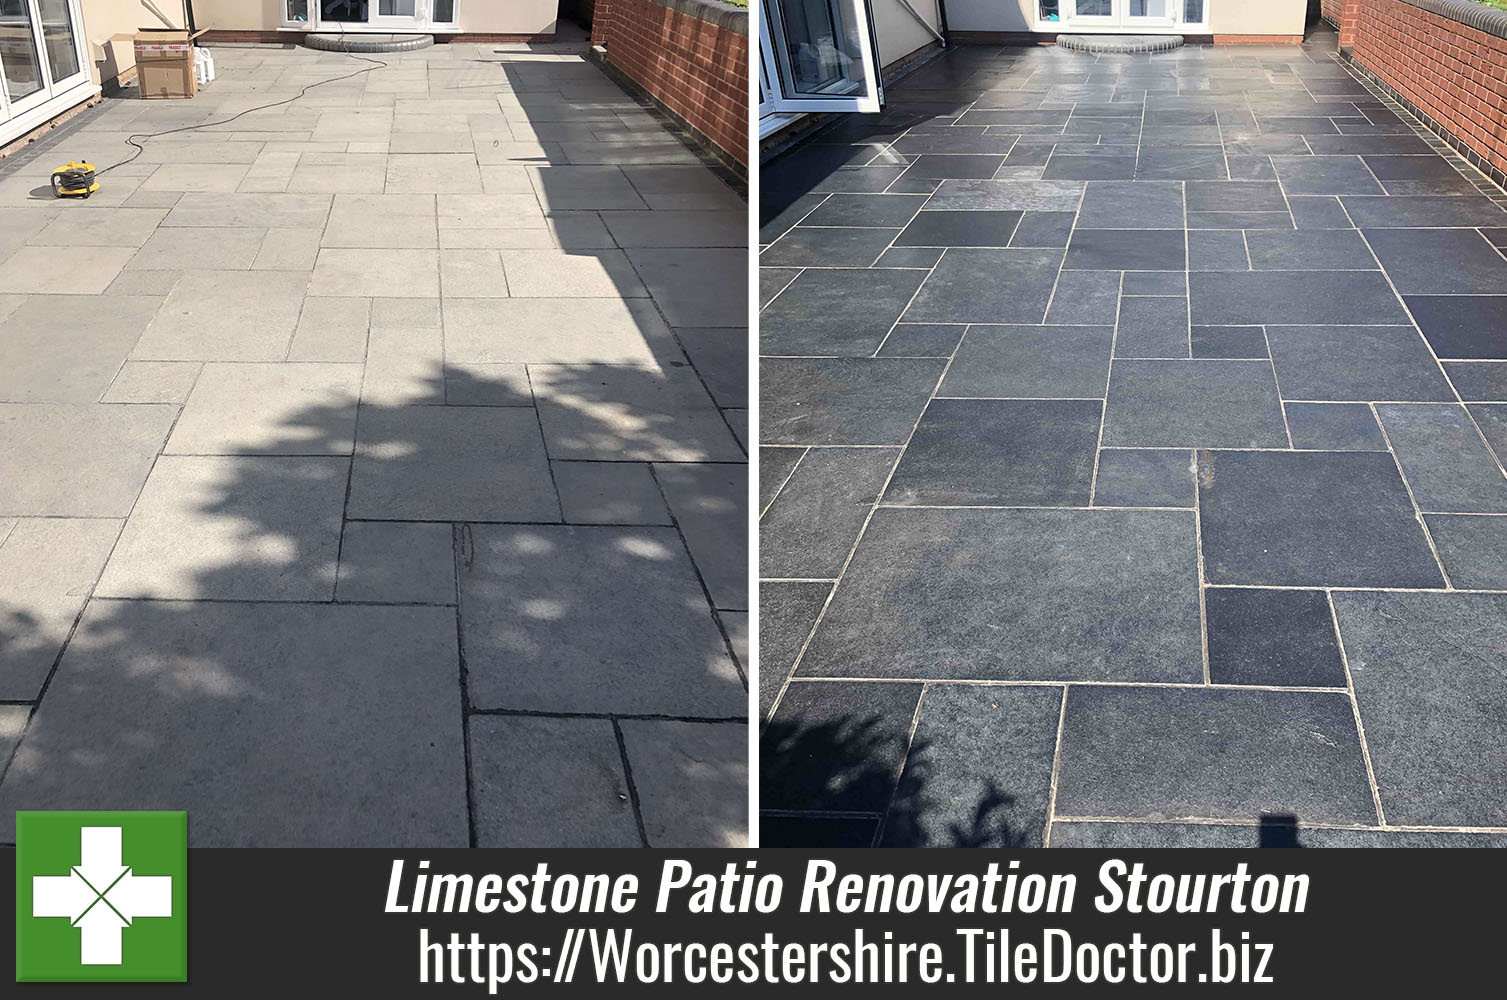 Colour Restored to Limestone Patio Tiles in Stourton